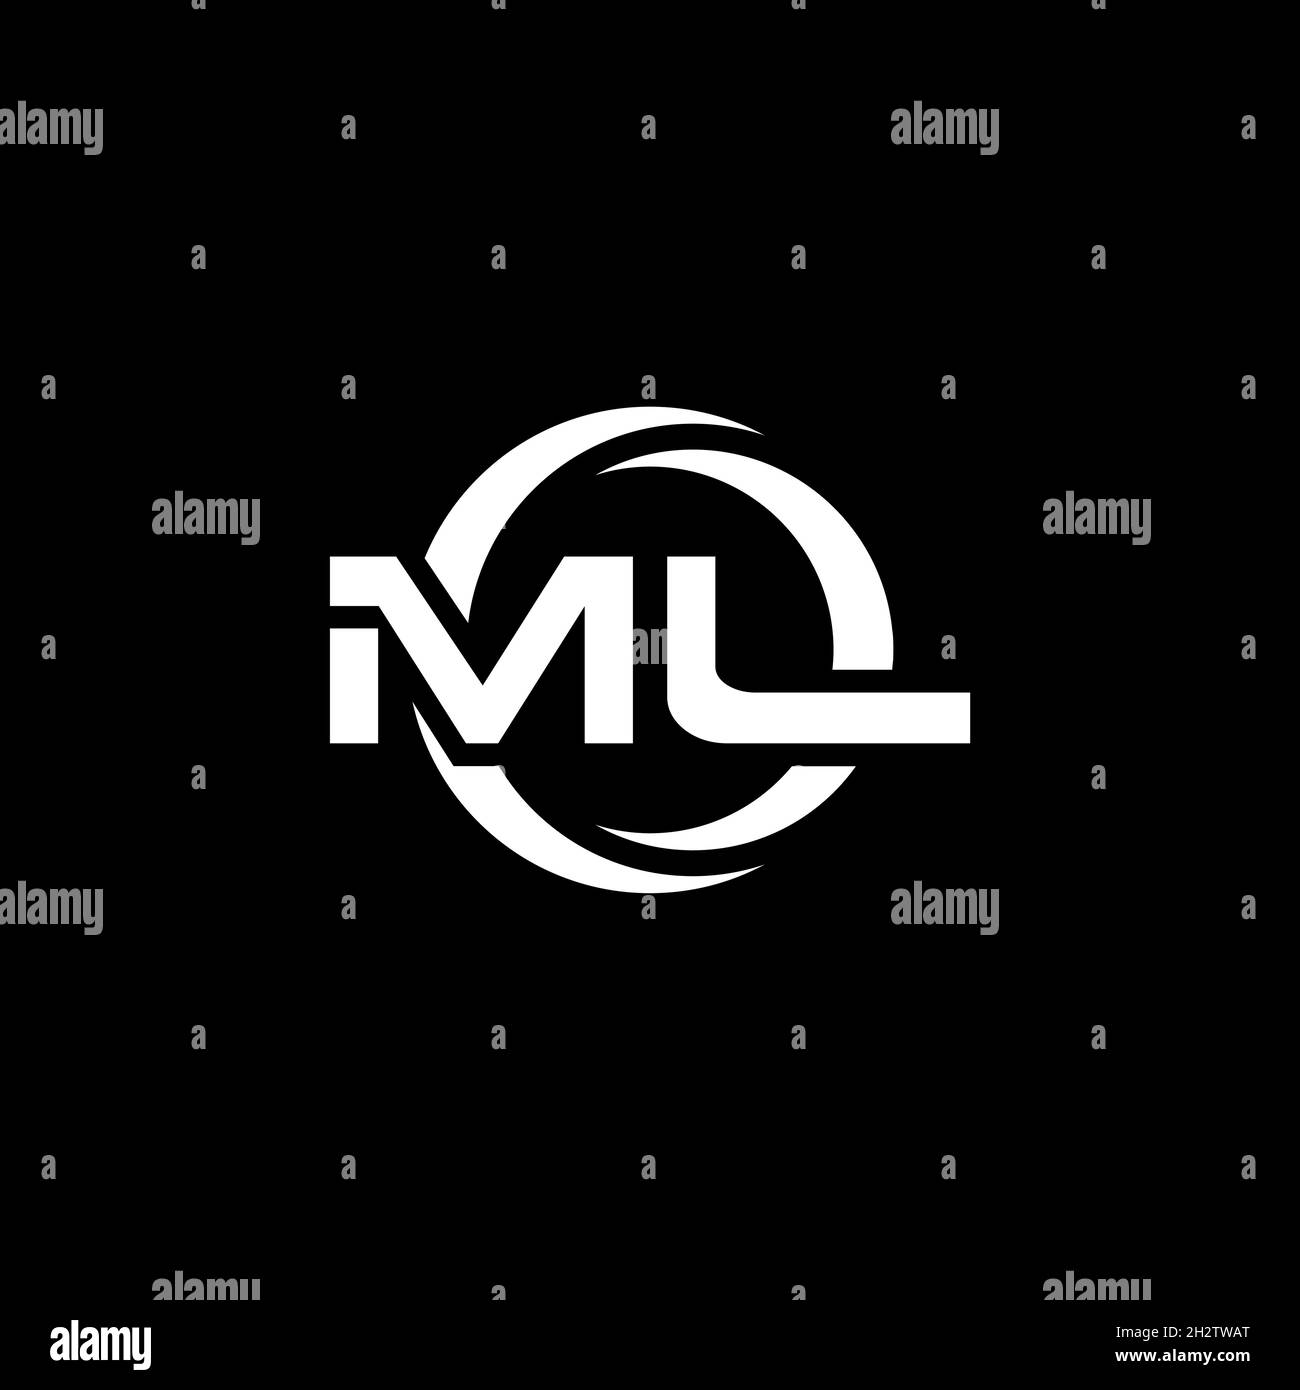 Lm monogram Black and White Stock Photos & Images - Alamy